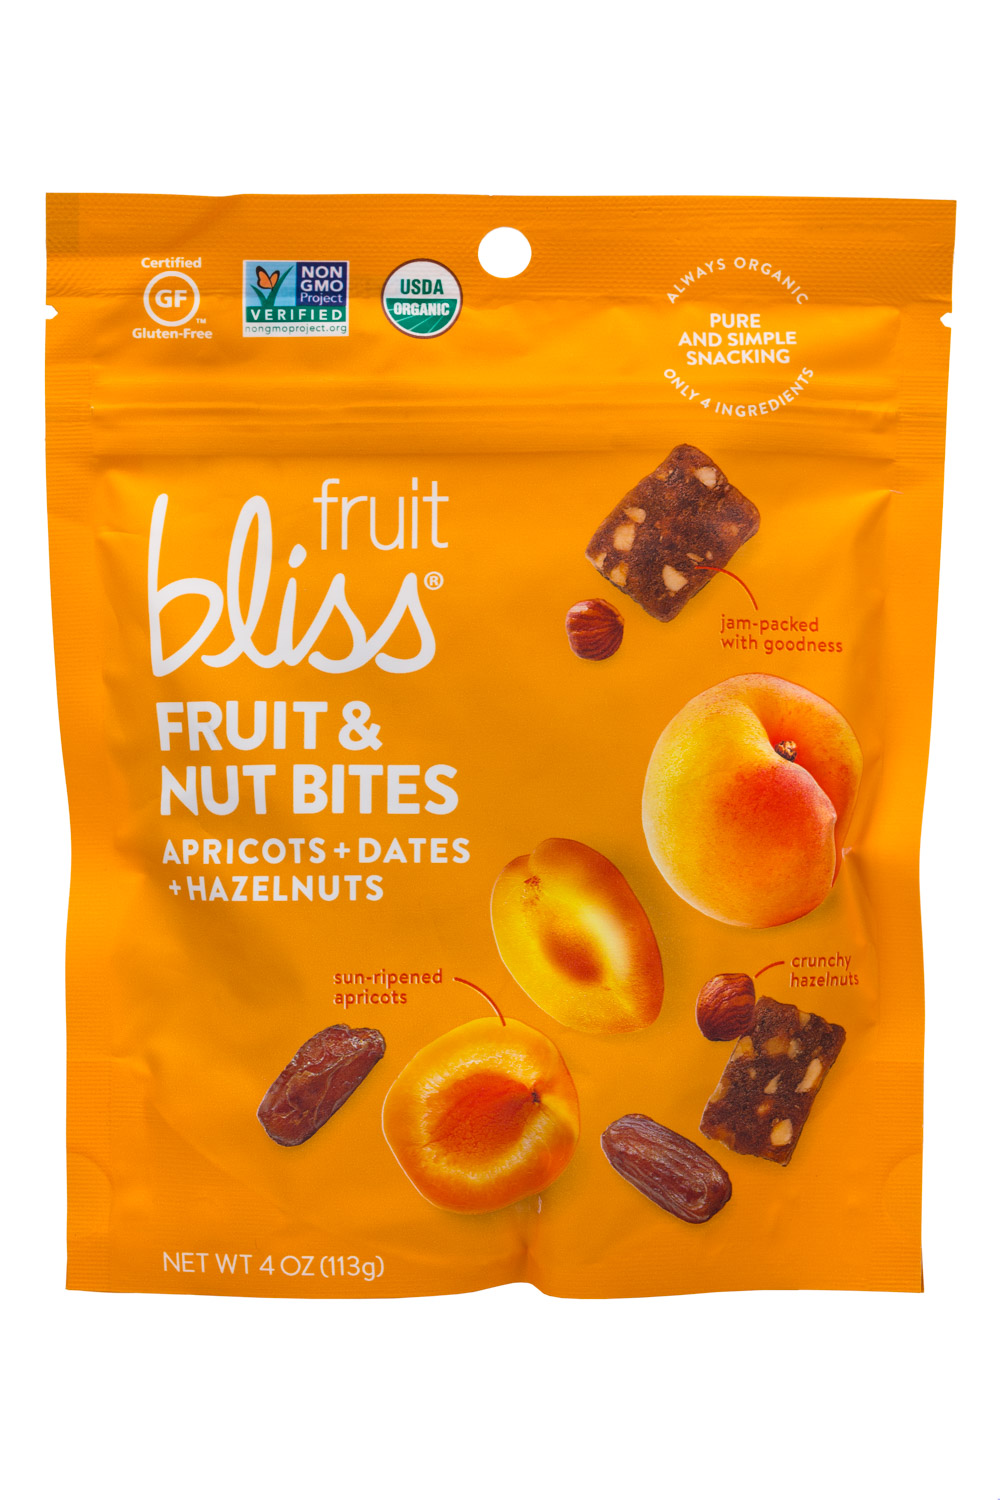 Apricots + Dates + Hazelnuts